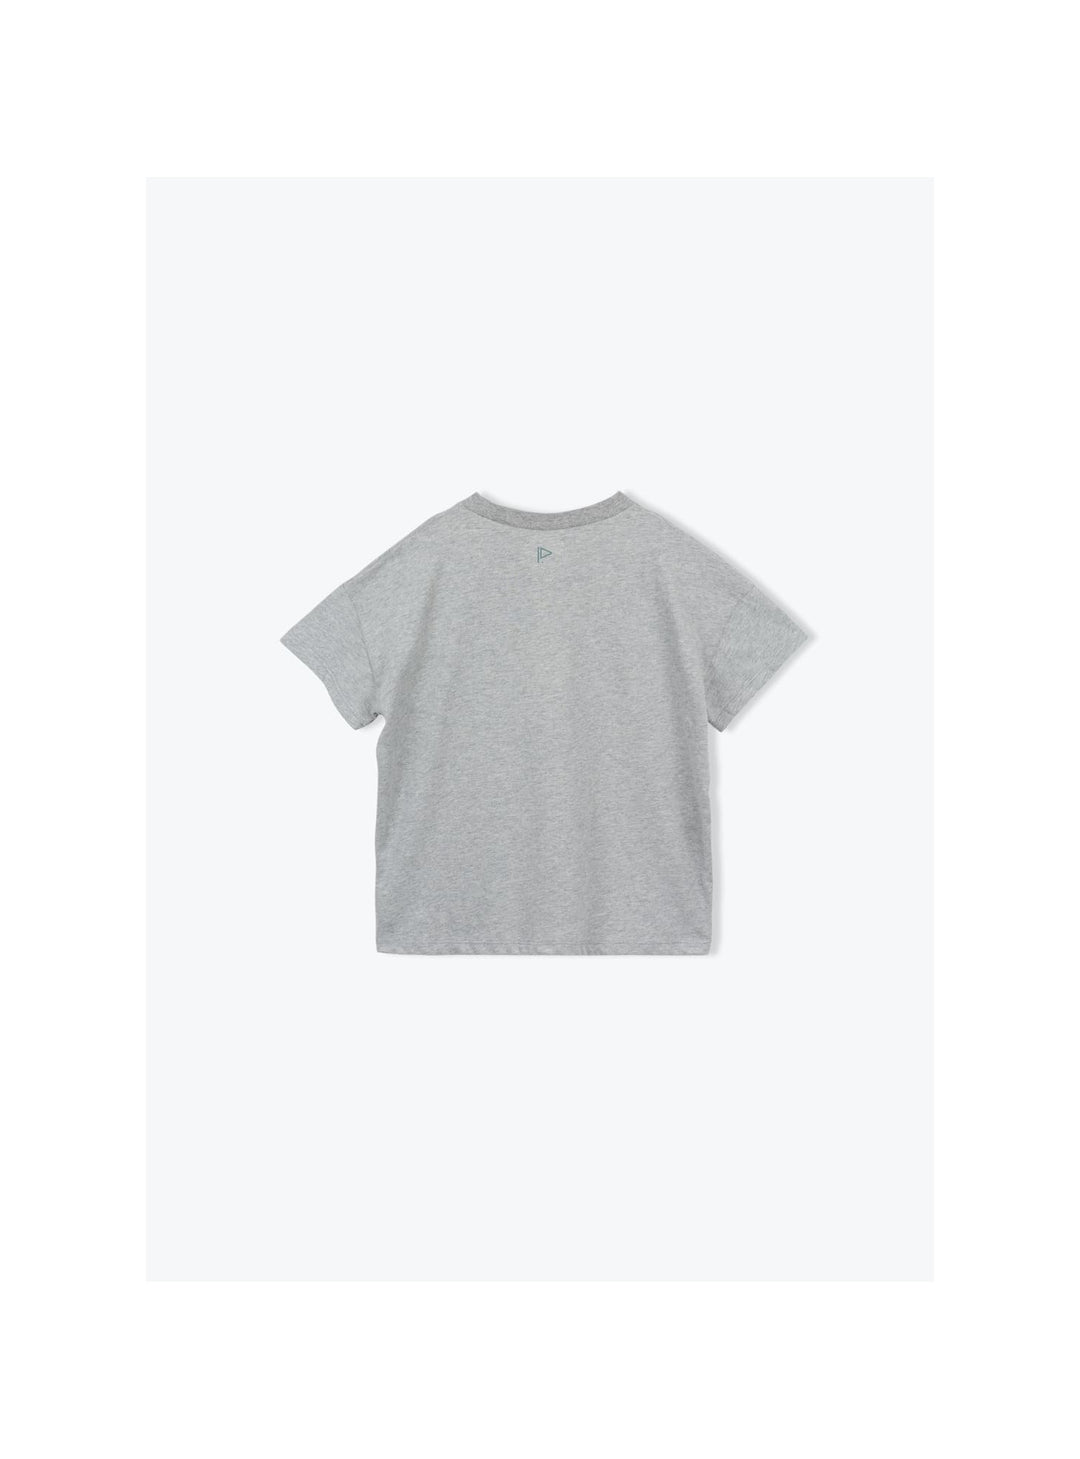 T-Shirt Boy Diboan - قميص